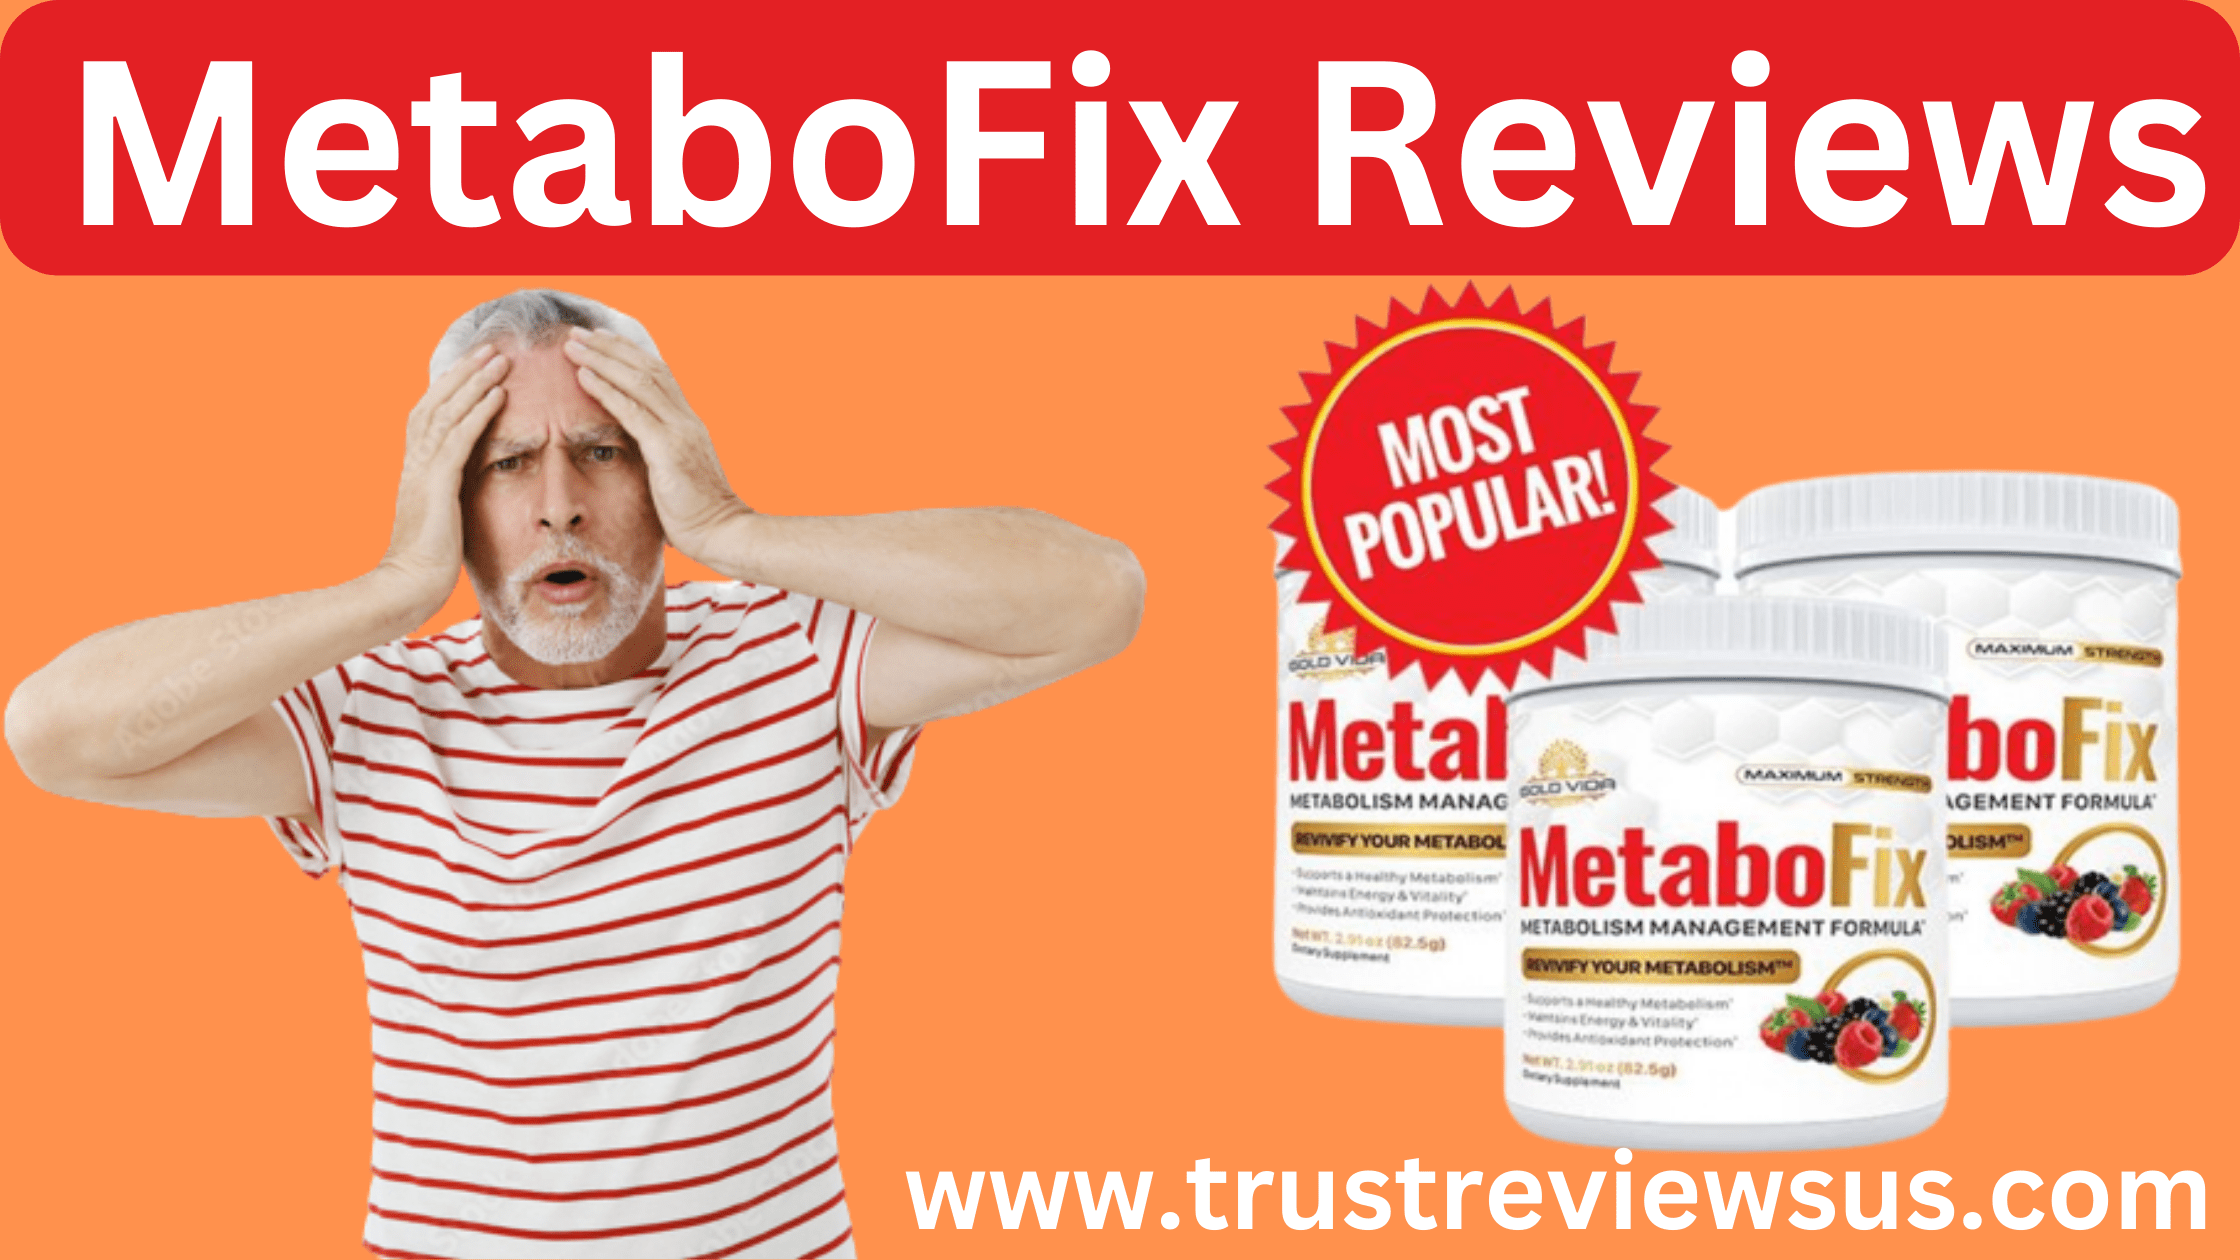 Metabofix Reviews